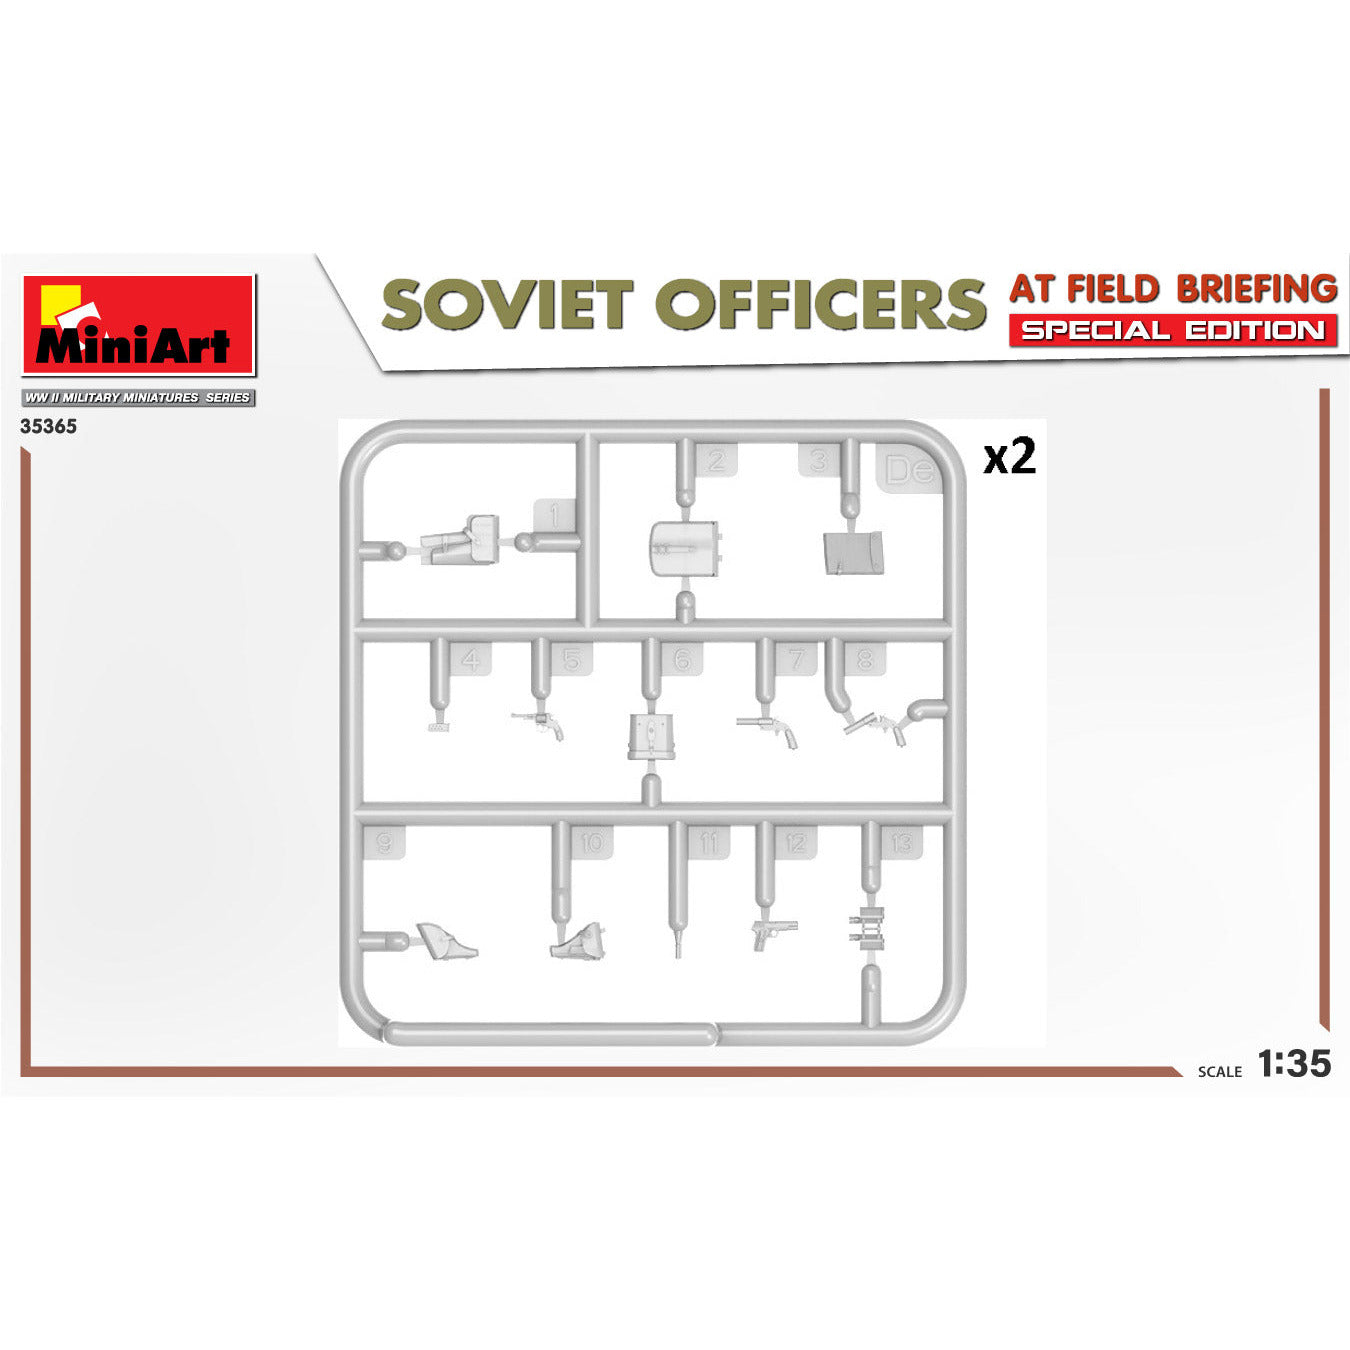 MINIART 1/35 Soviet Officers at Firld Briefing Special Edition